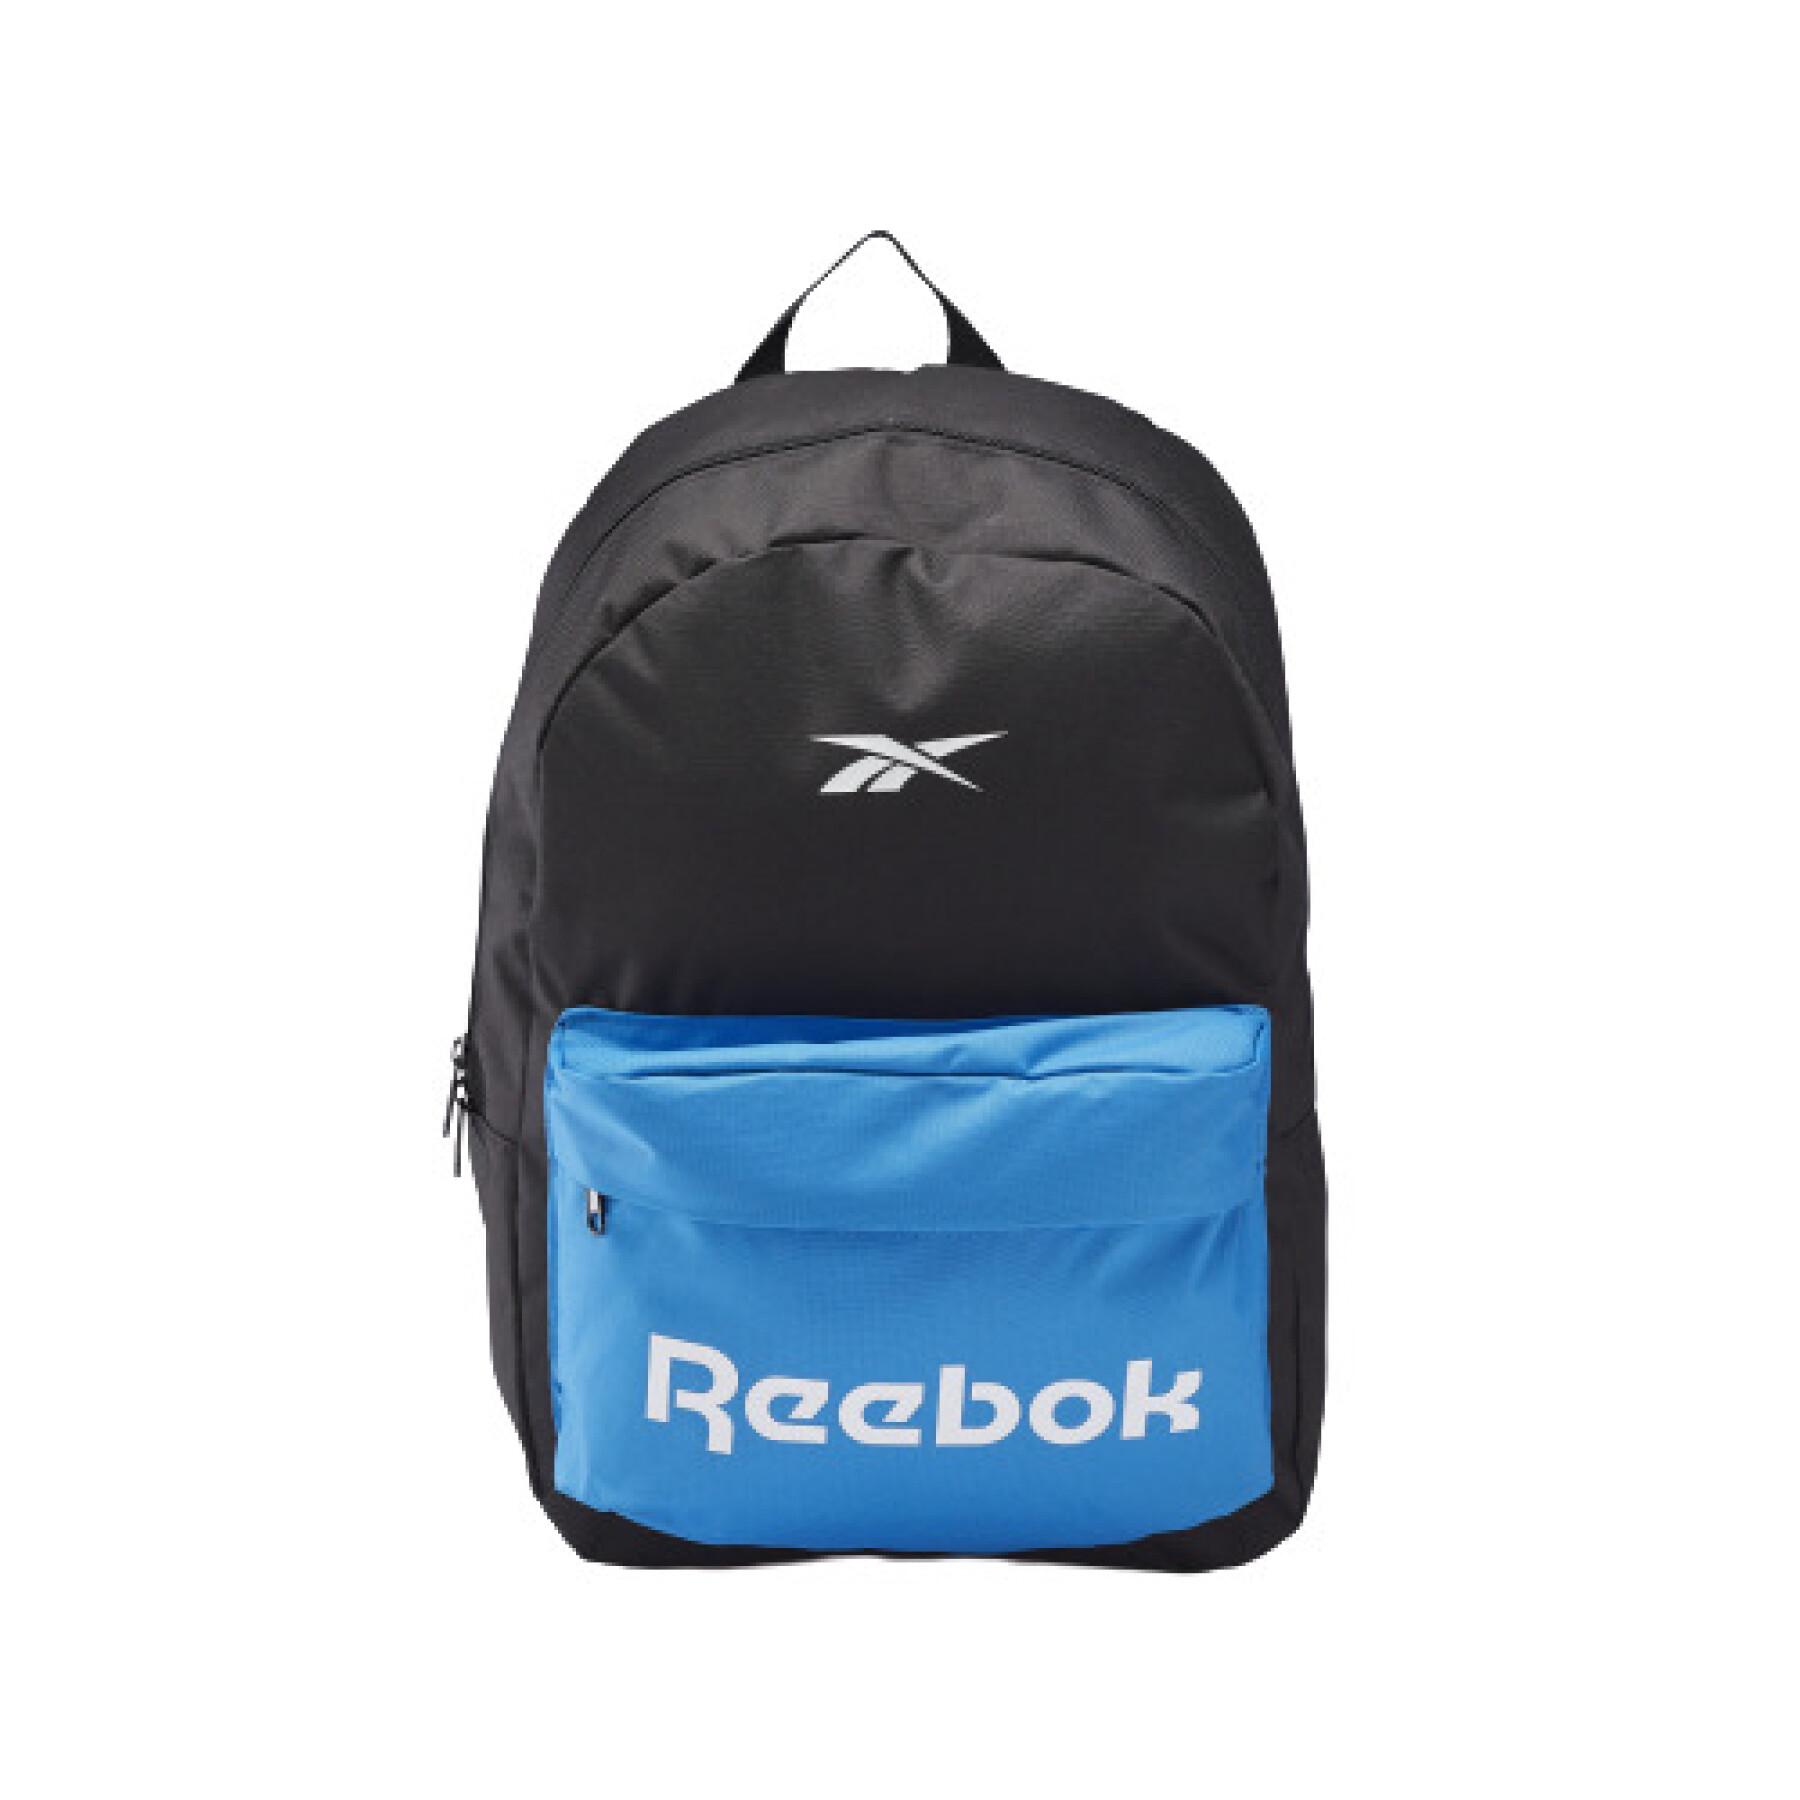 Backpack Reebok Active Core S